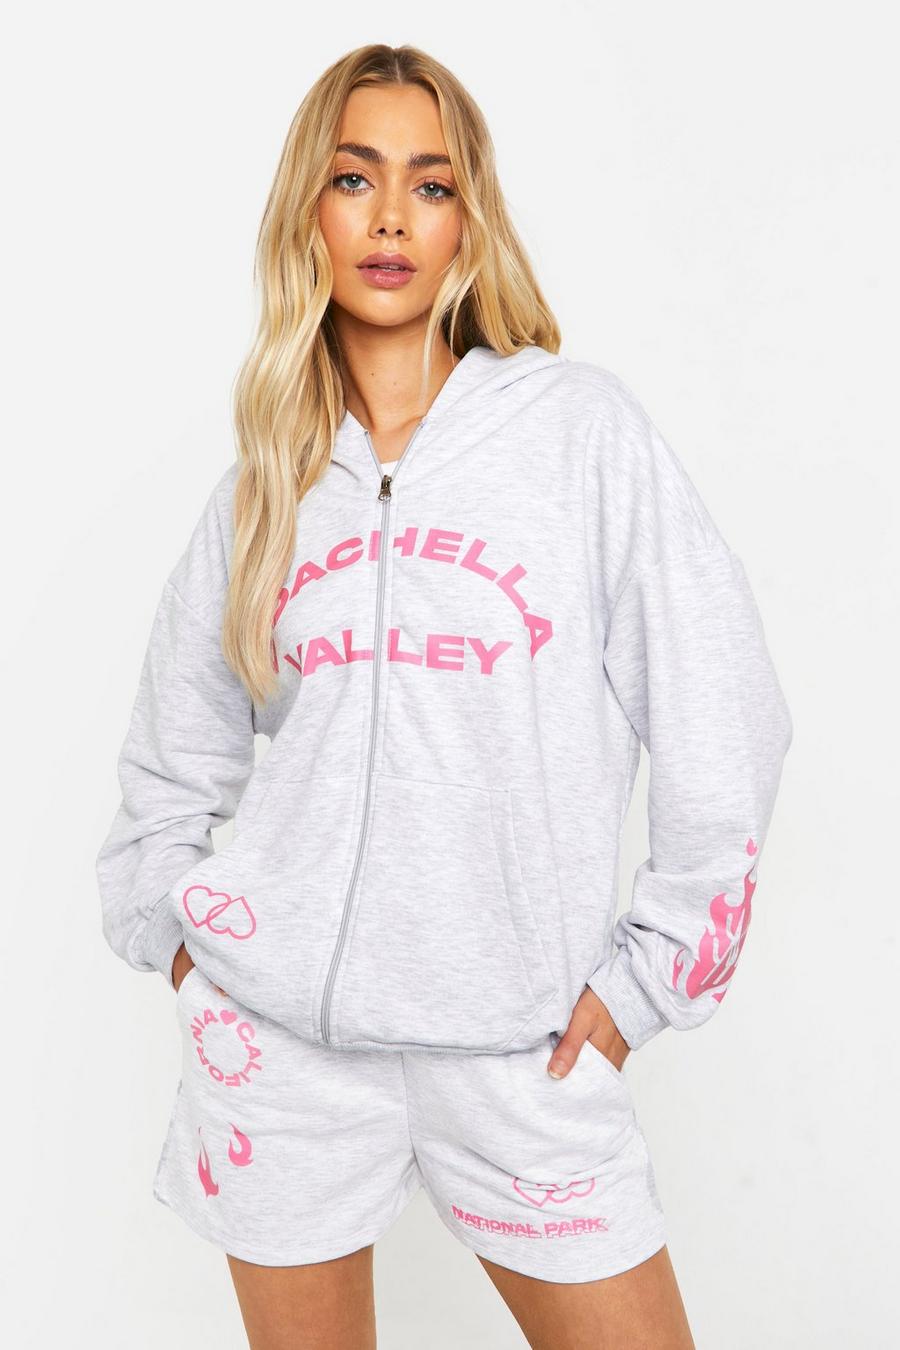 Ash grey Coachella Valley Multi Print Zip Through Hooded Tracksuit